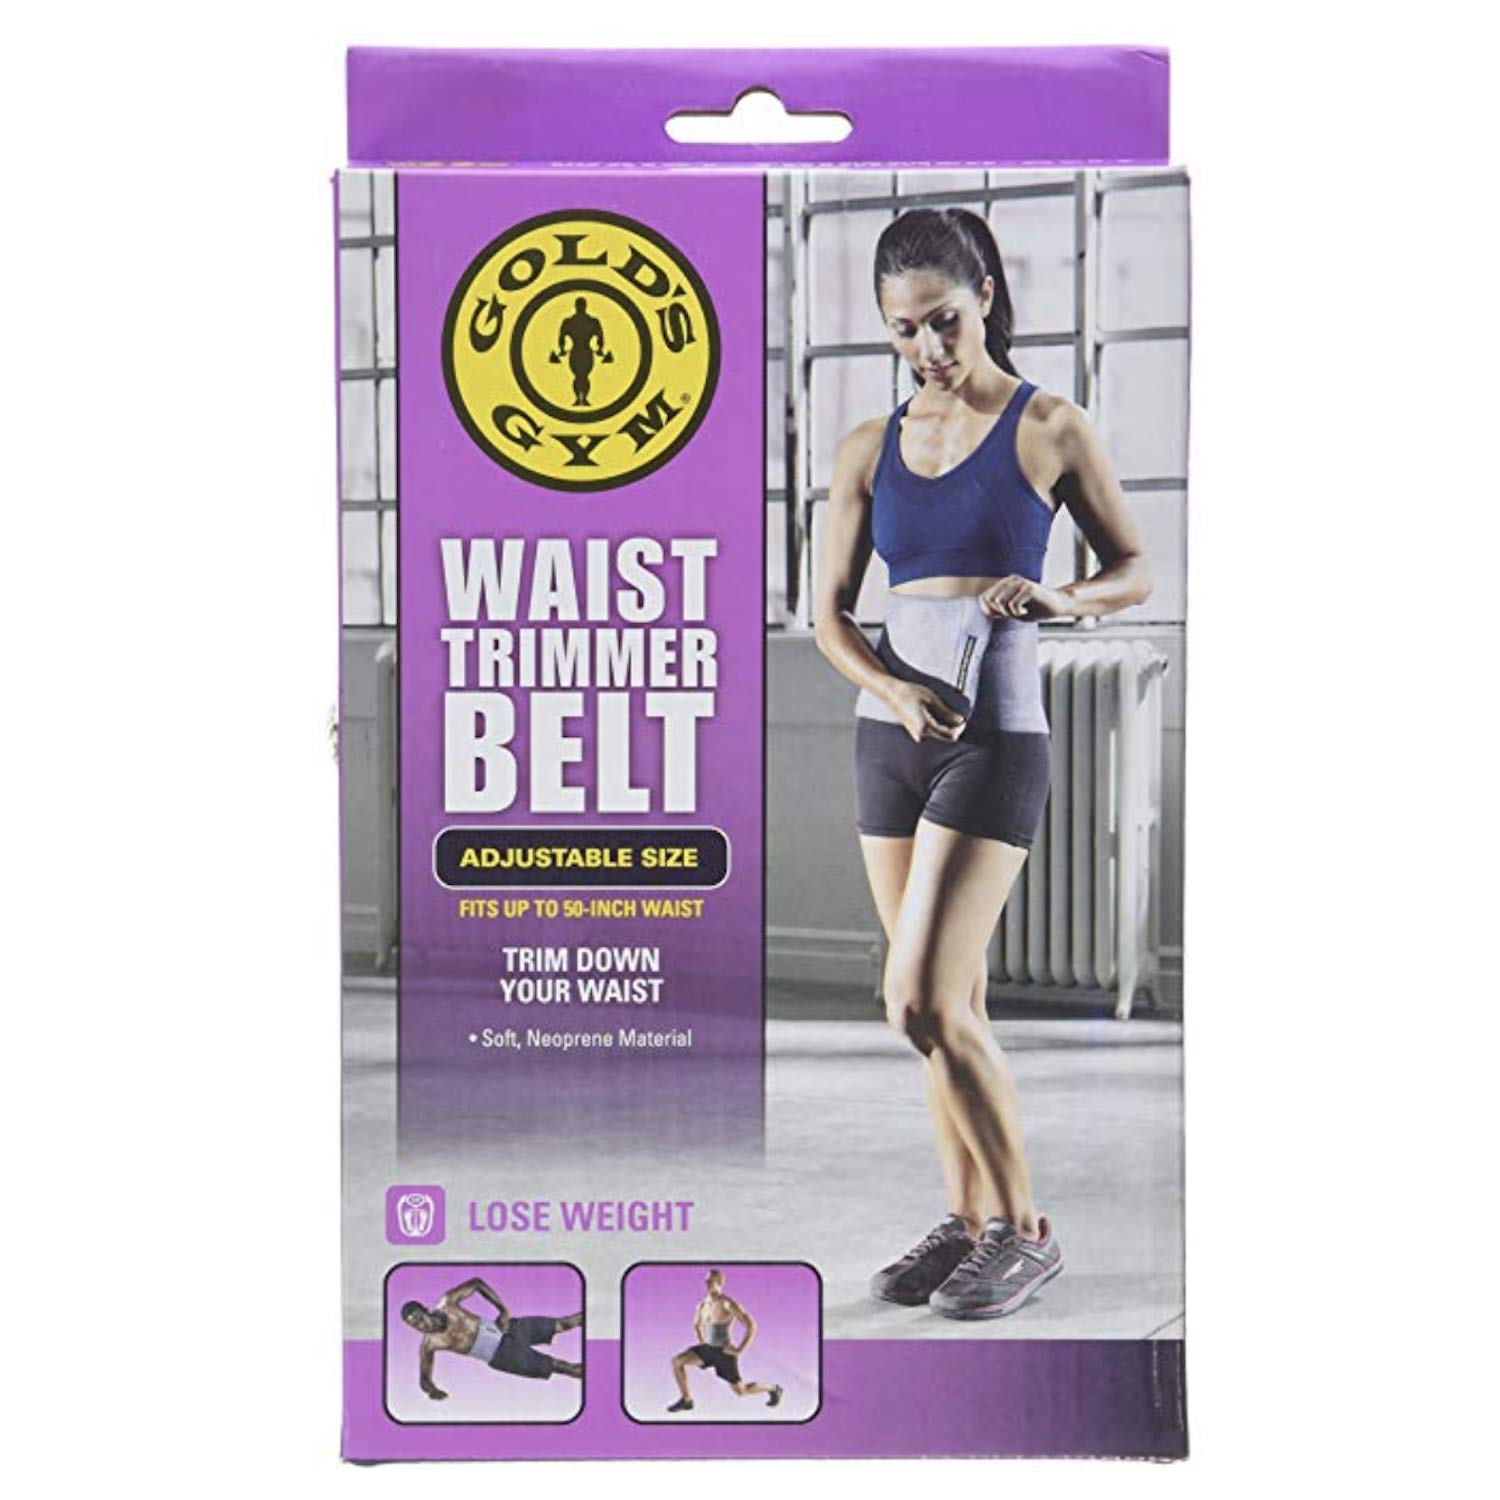 Gold's Gym Waist Trimmer Belt - Adjustable Size fits up to 50 inch